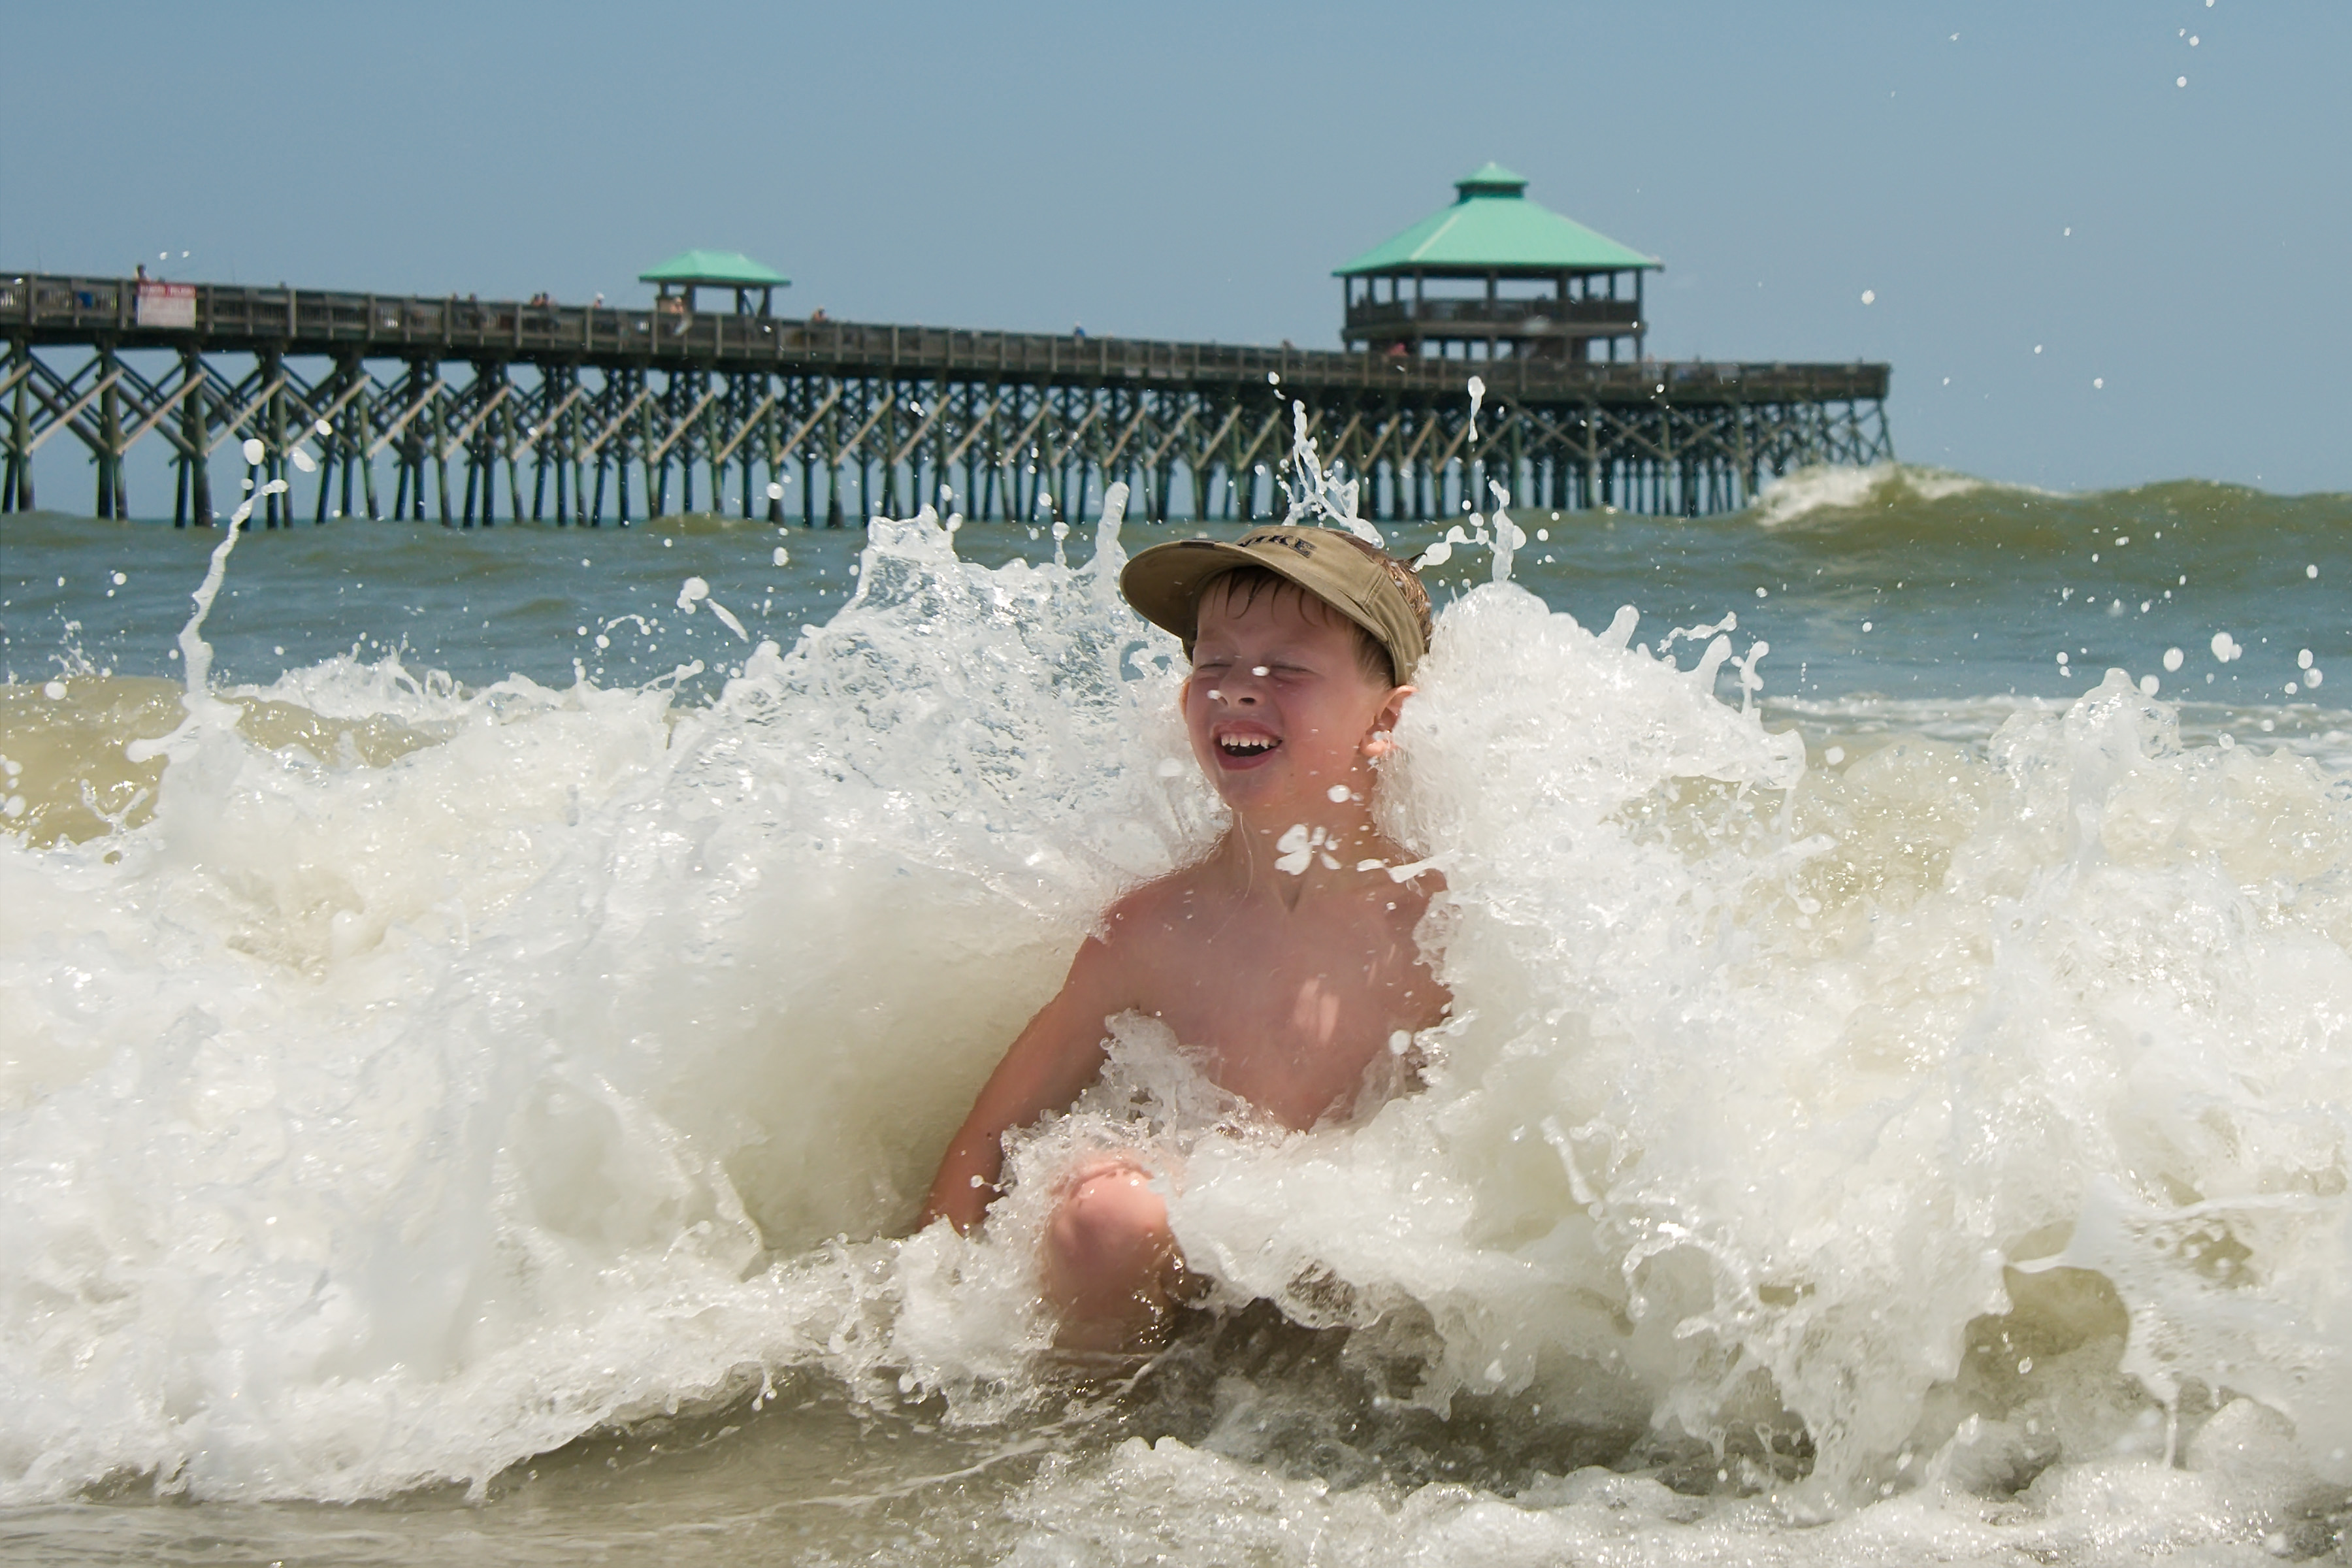 Ryans big splash at Folly beach, South Carolina